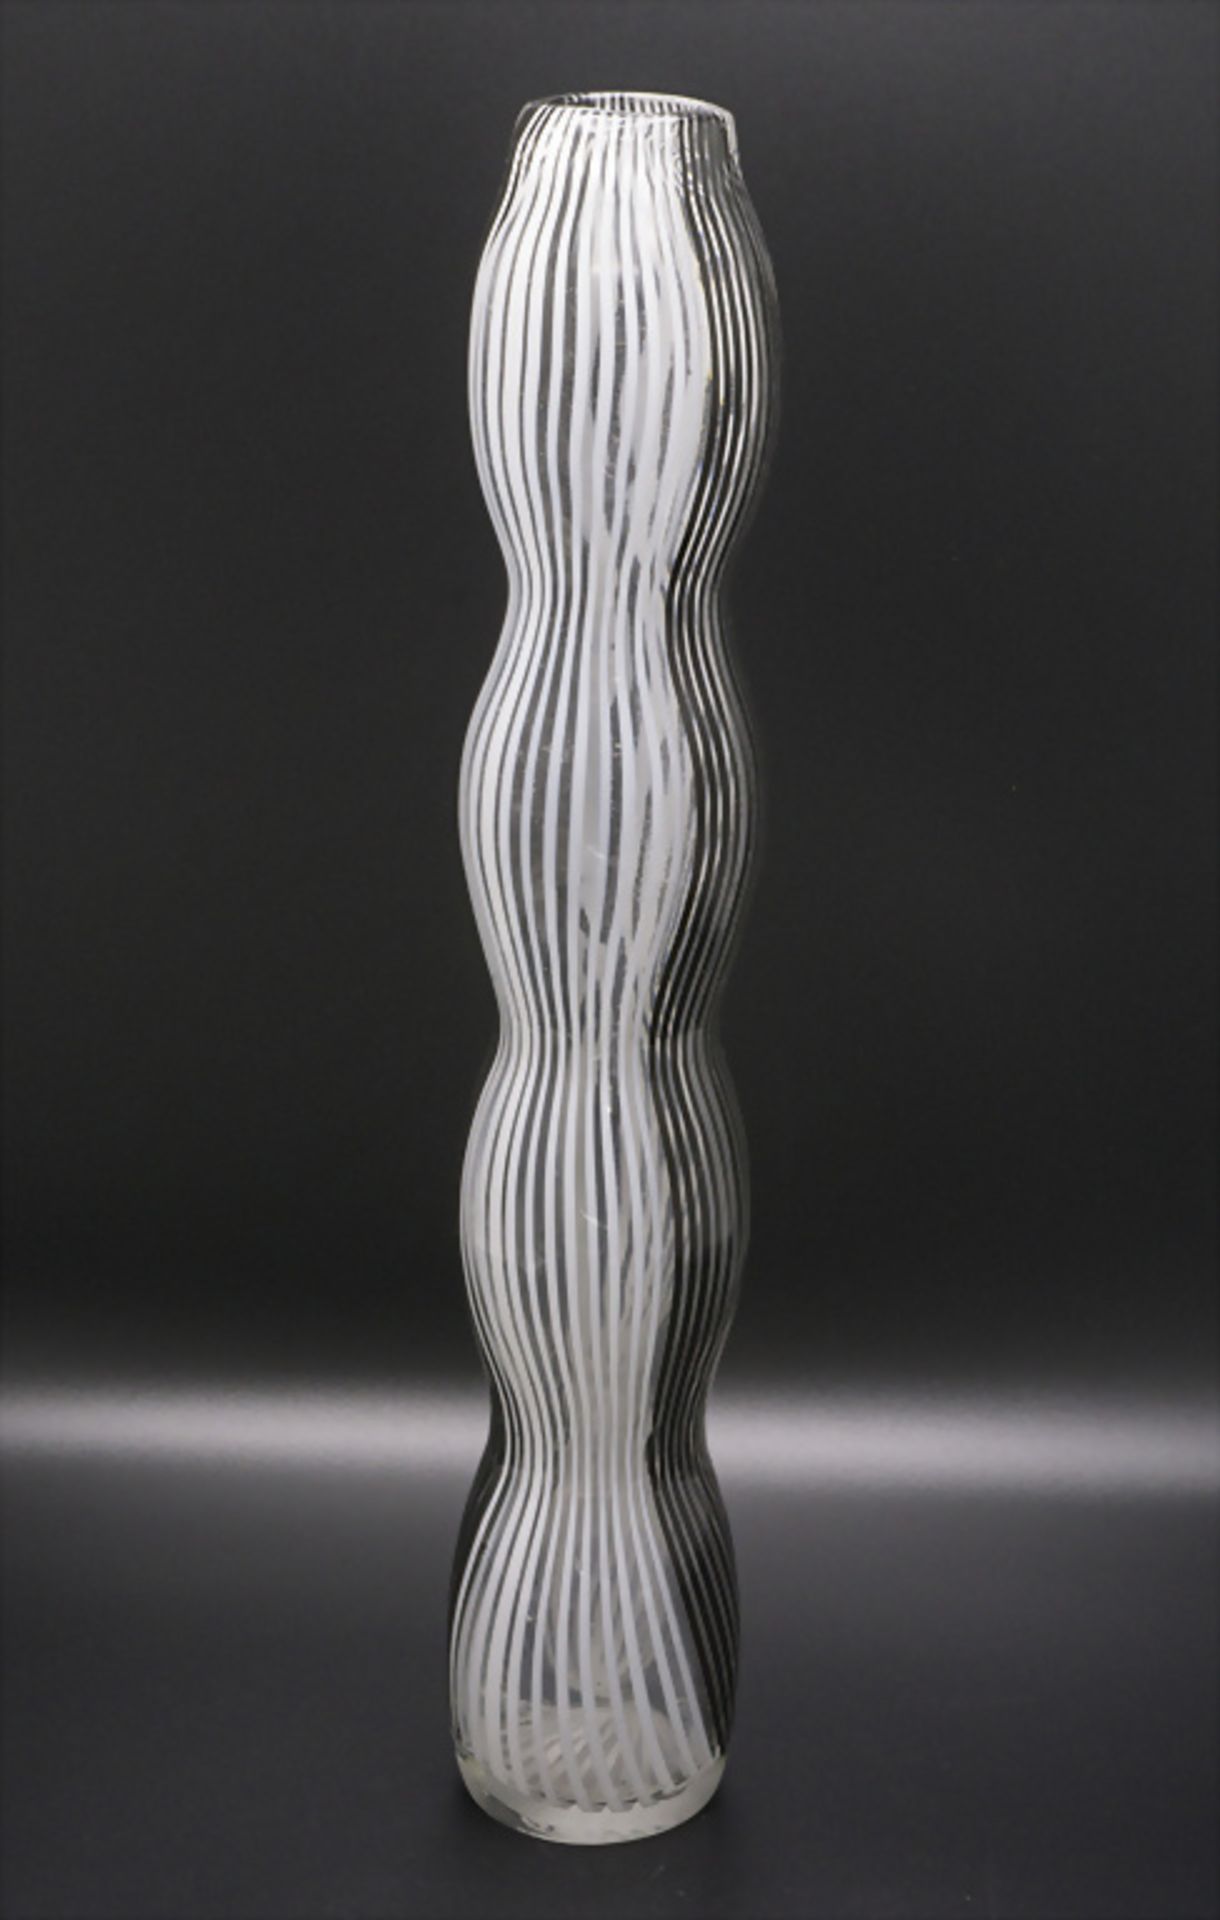 Glasziervase / A decorative vase, wohl Aureliano Toso, Murano, 60er Jahre